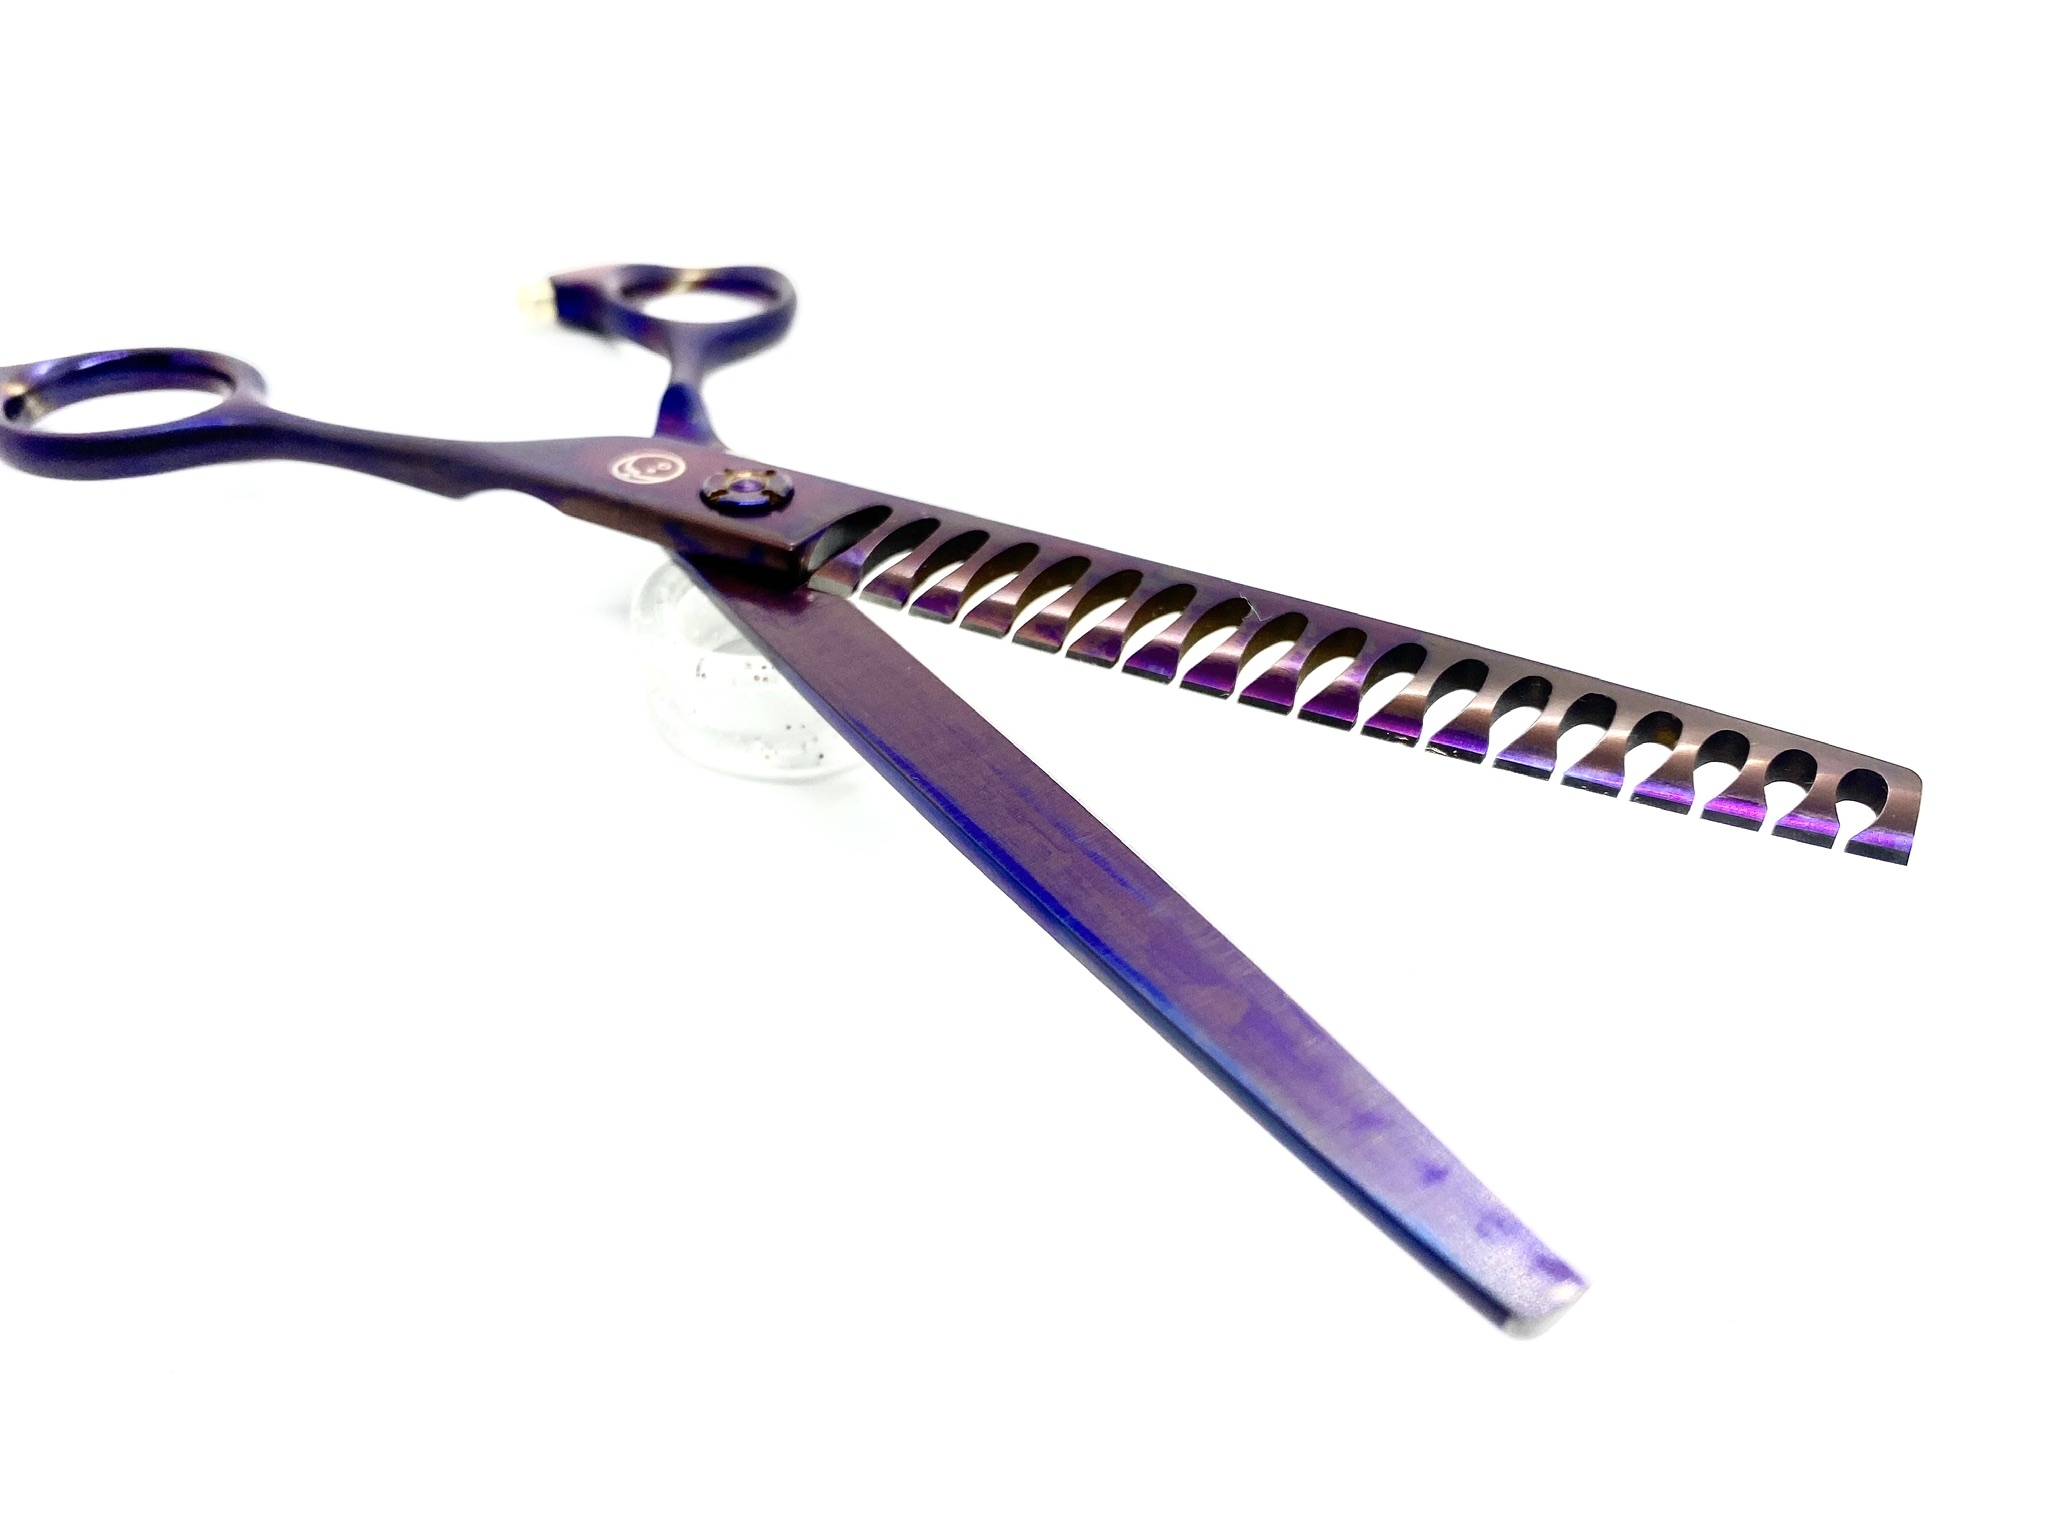 The Best Scissors for Cutting Children's Hair – Ninja Scissors